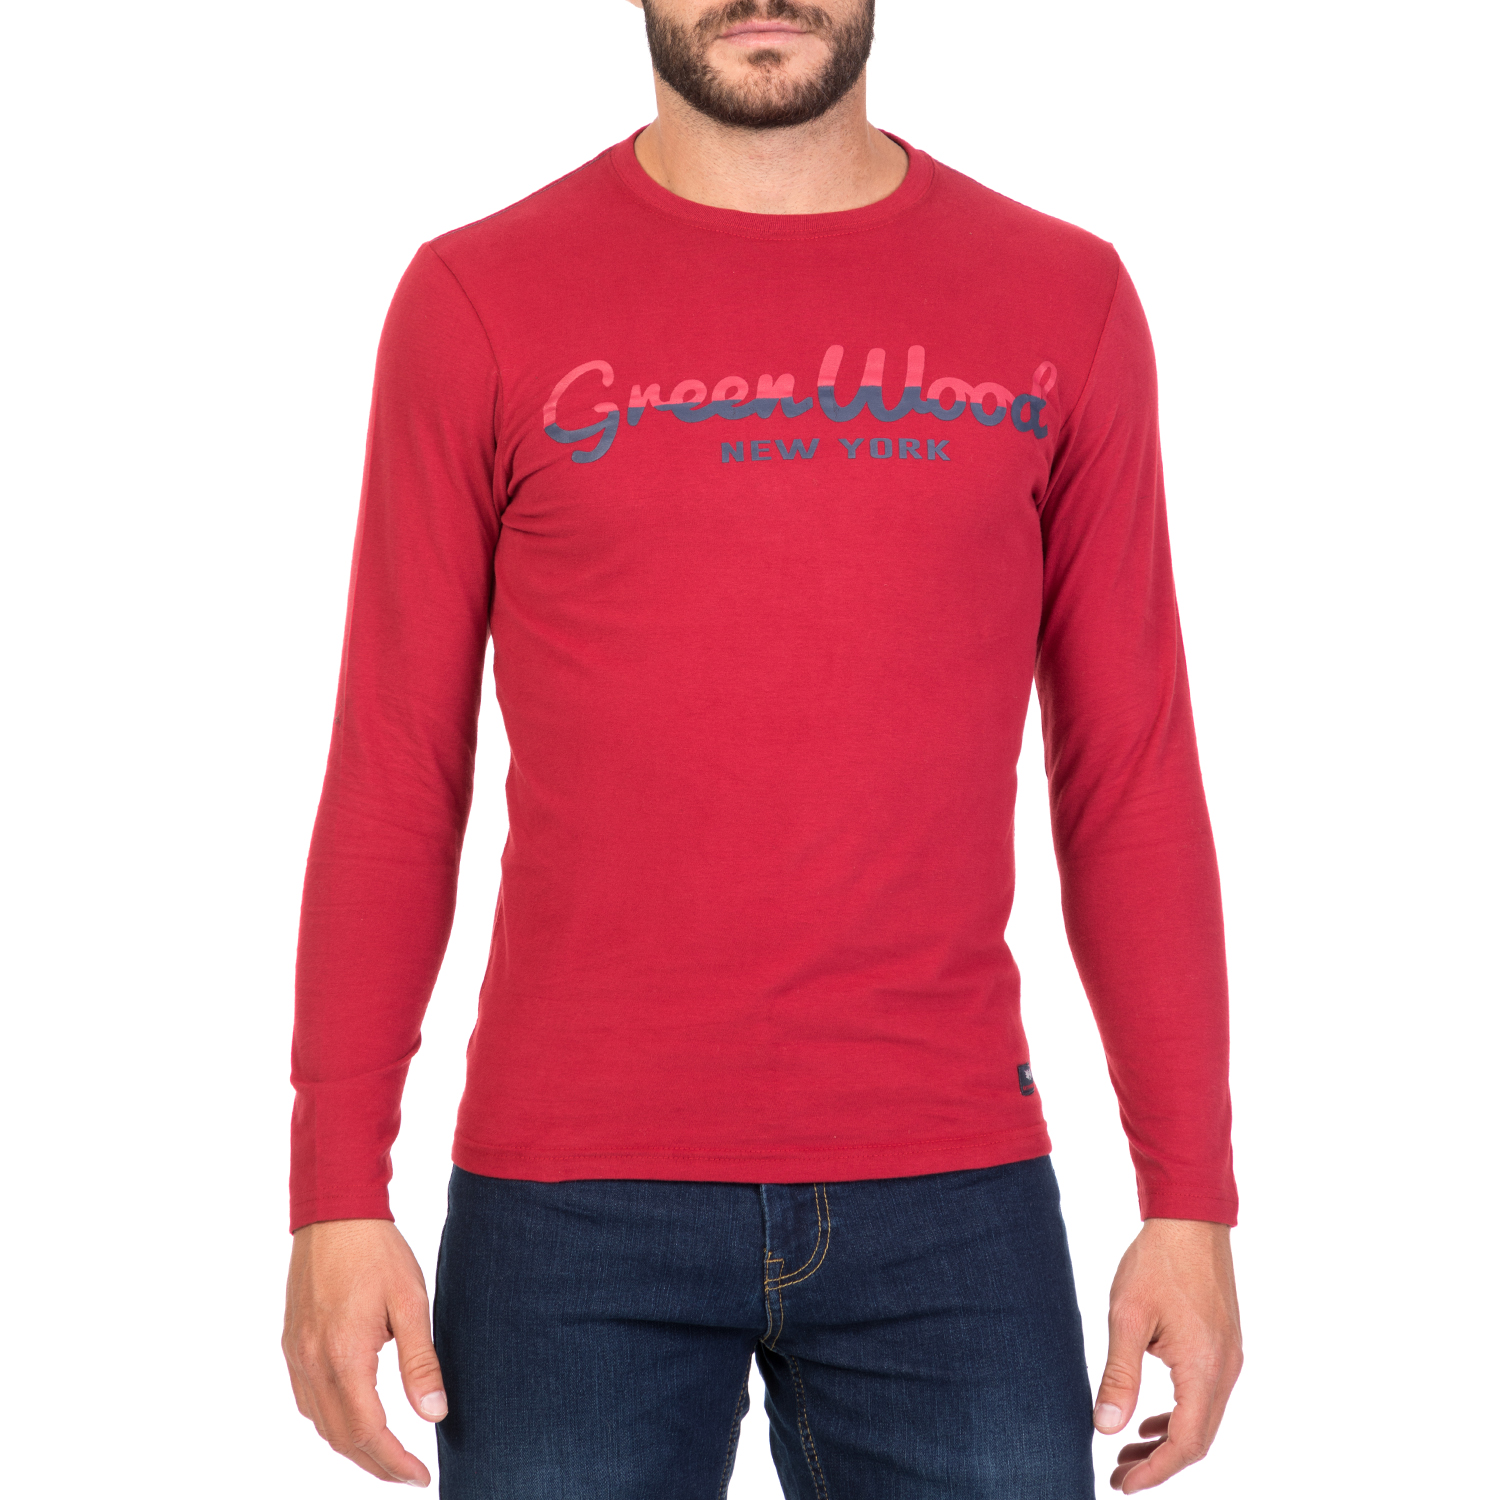 GREENWOOD - Ανδρική μακρυμάνικη μπλούζα GREENWOOD κόκκινη Ανδρικά/Ρούχα/Μπλούζες/Μακρυμάνικες